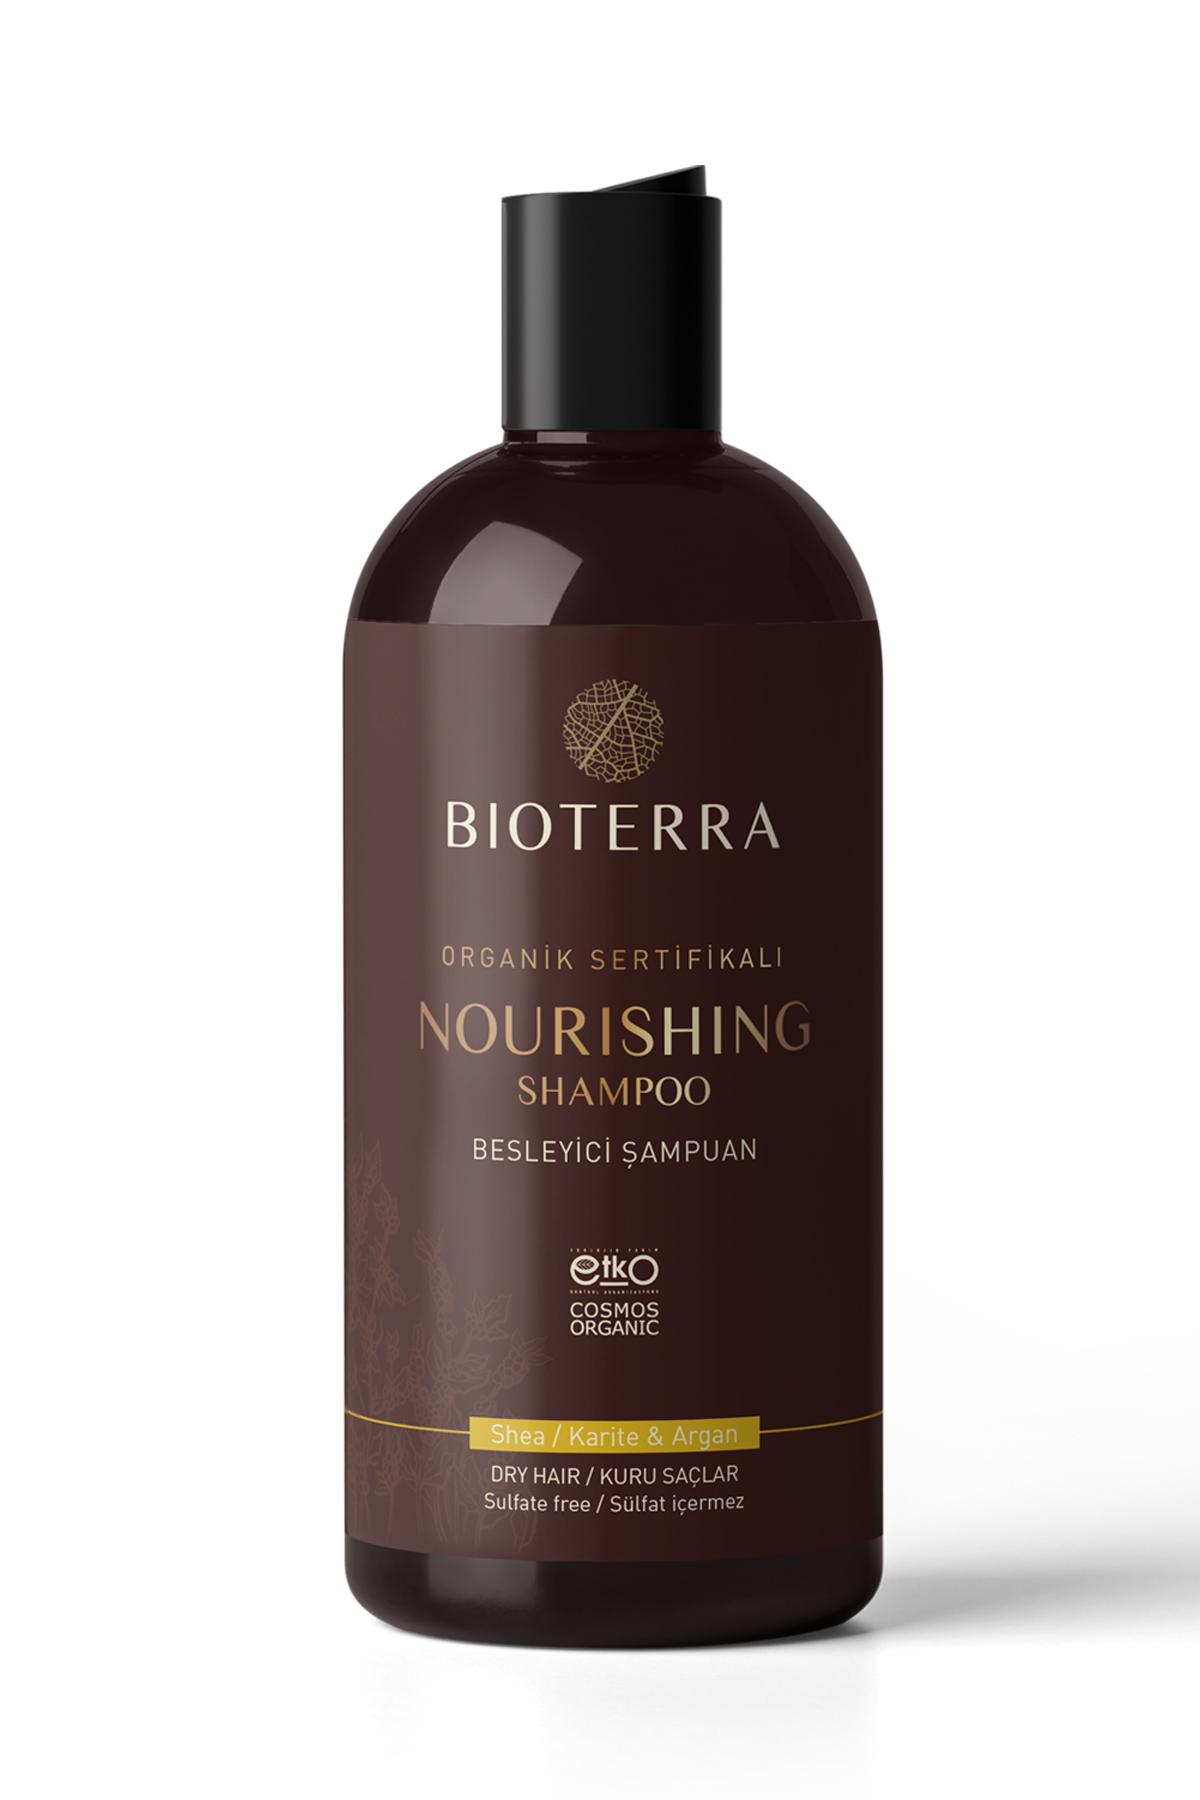 Nourishing Shampoo For Dry Hair 400 ml, Bioterra Organic Shampoo